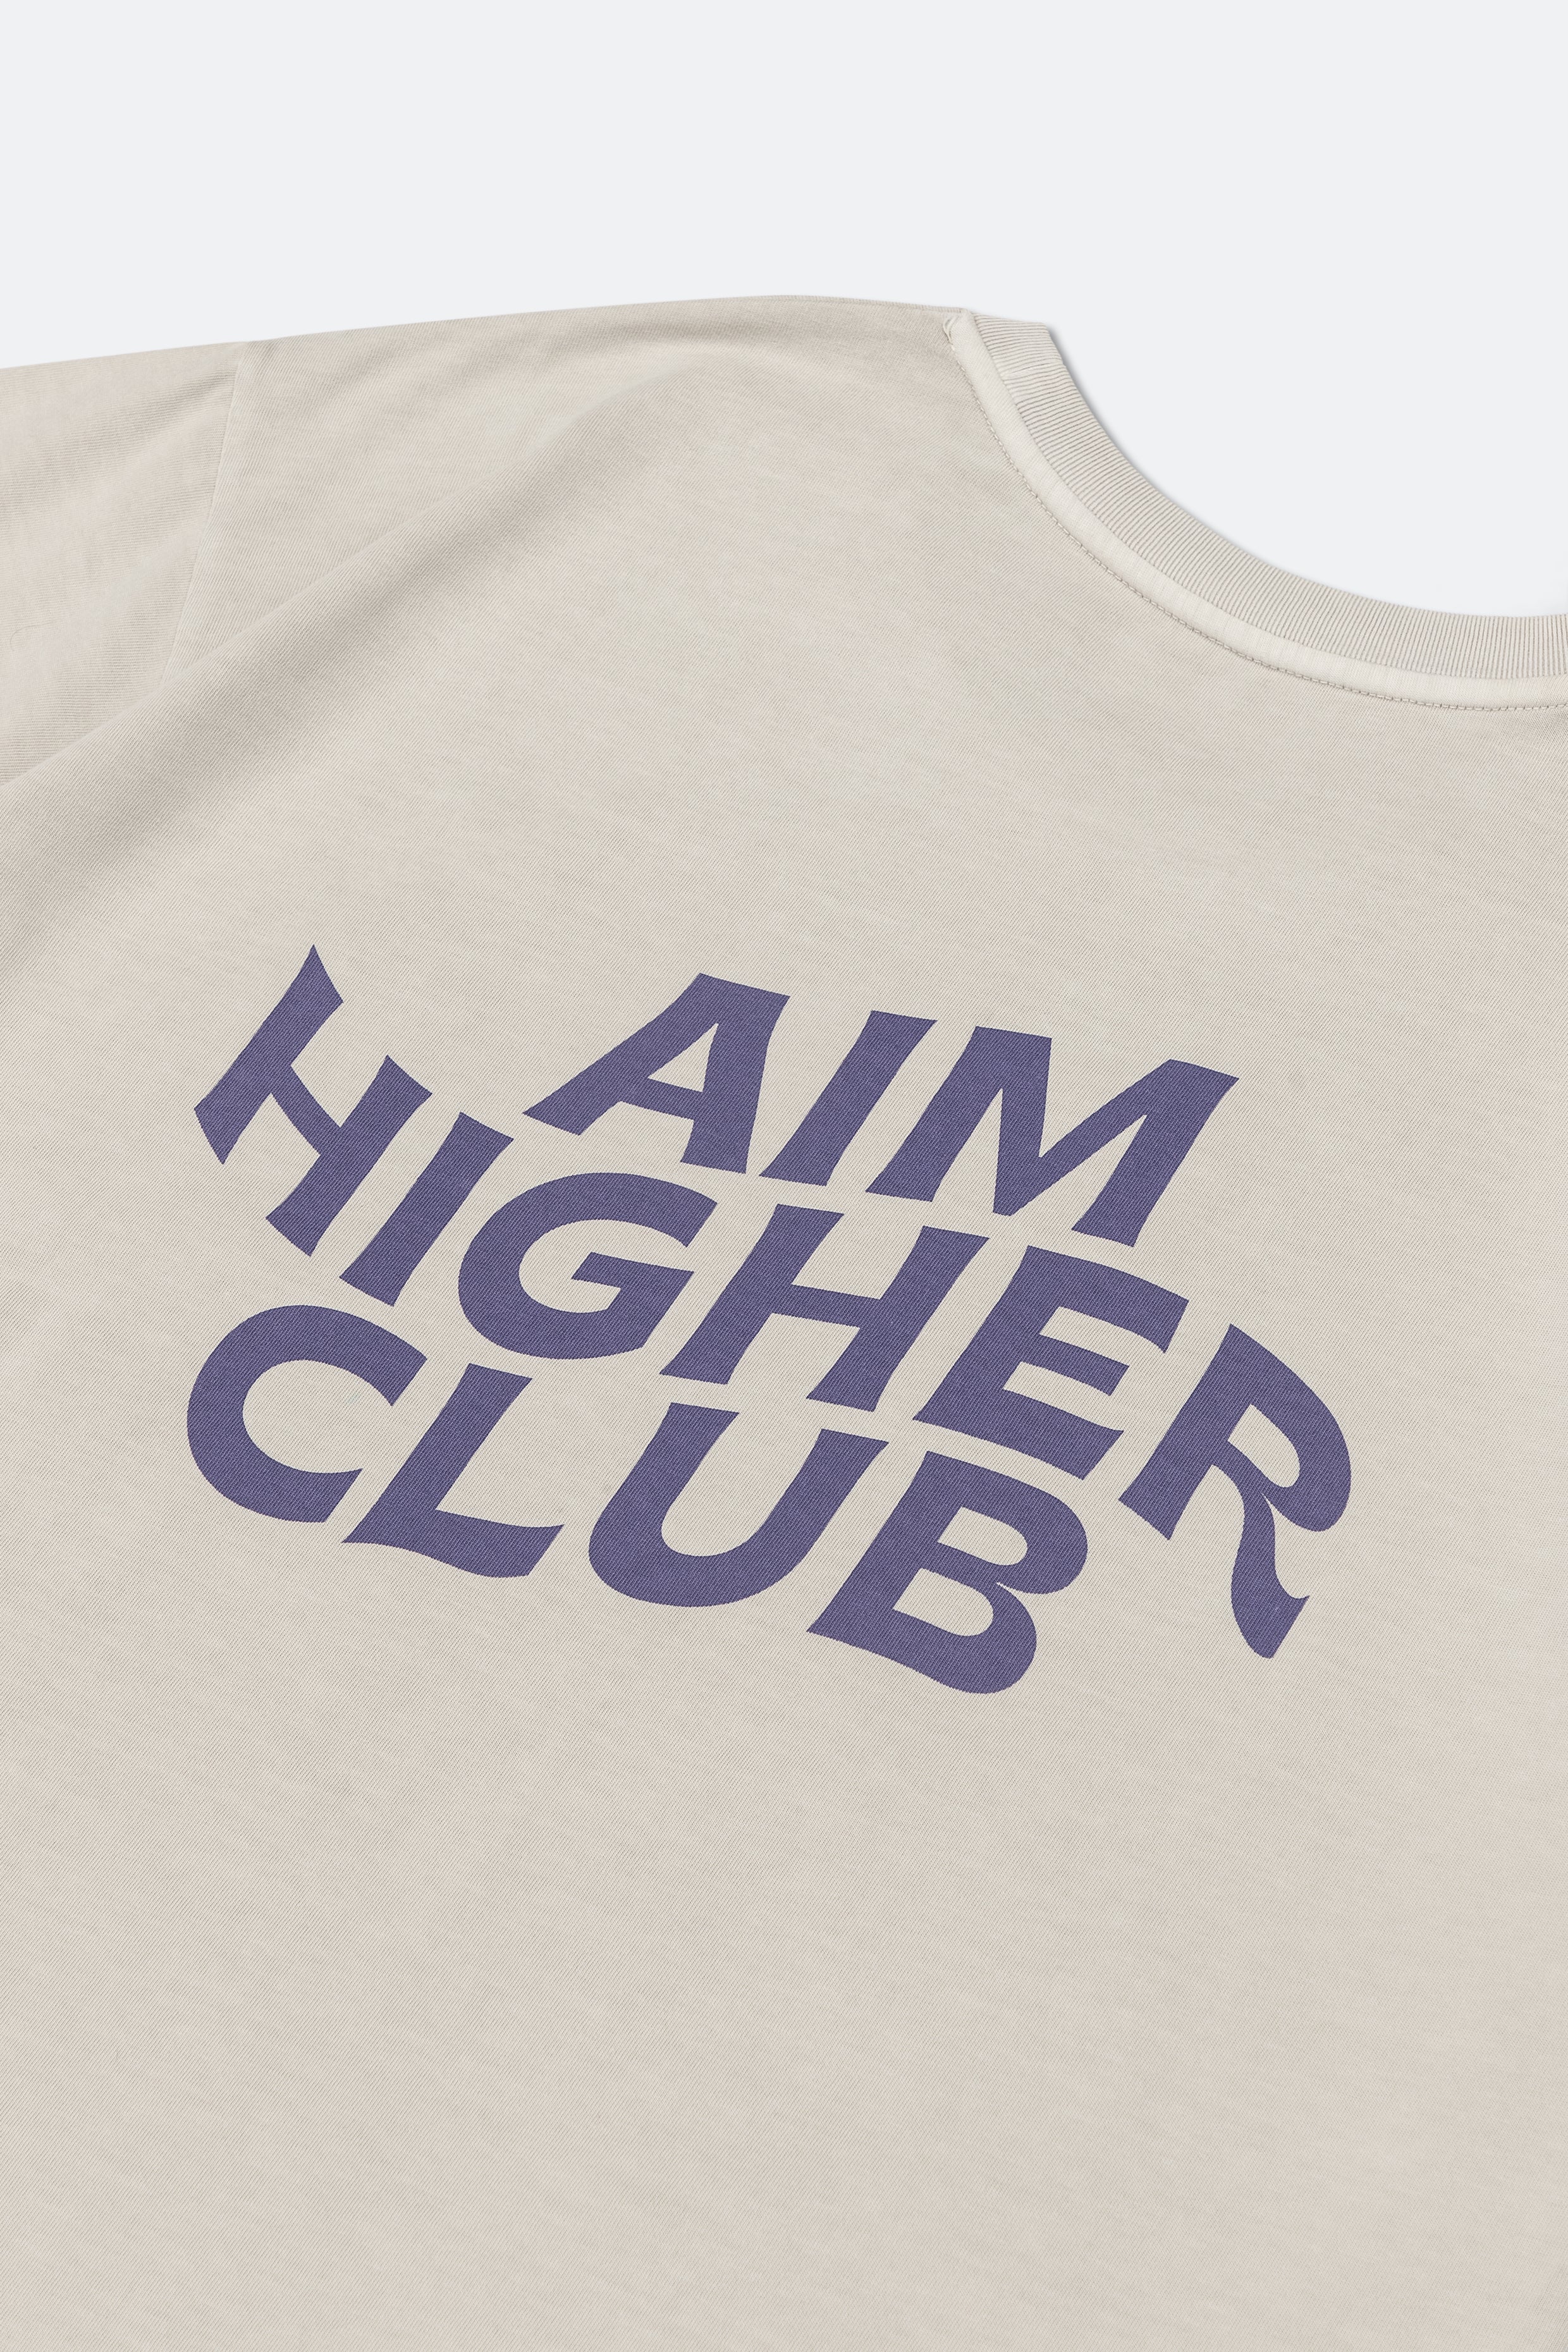 Aim Higher Club Wave Logo Tee